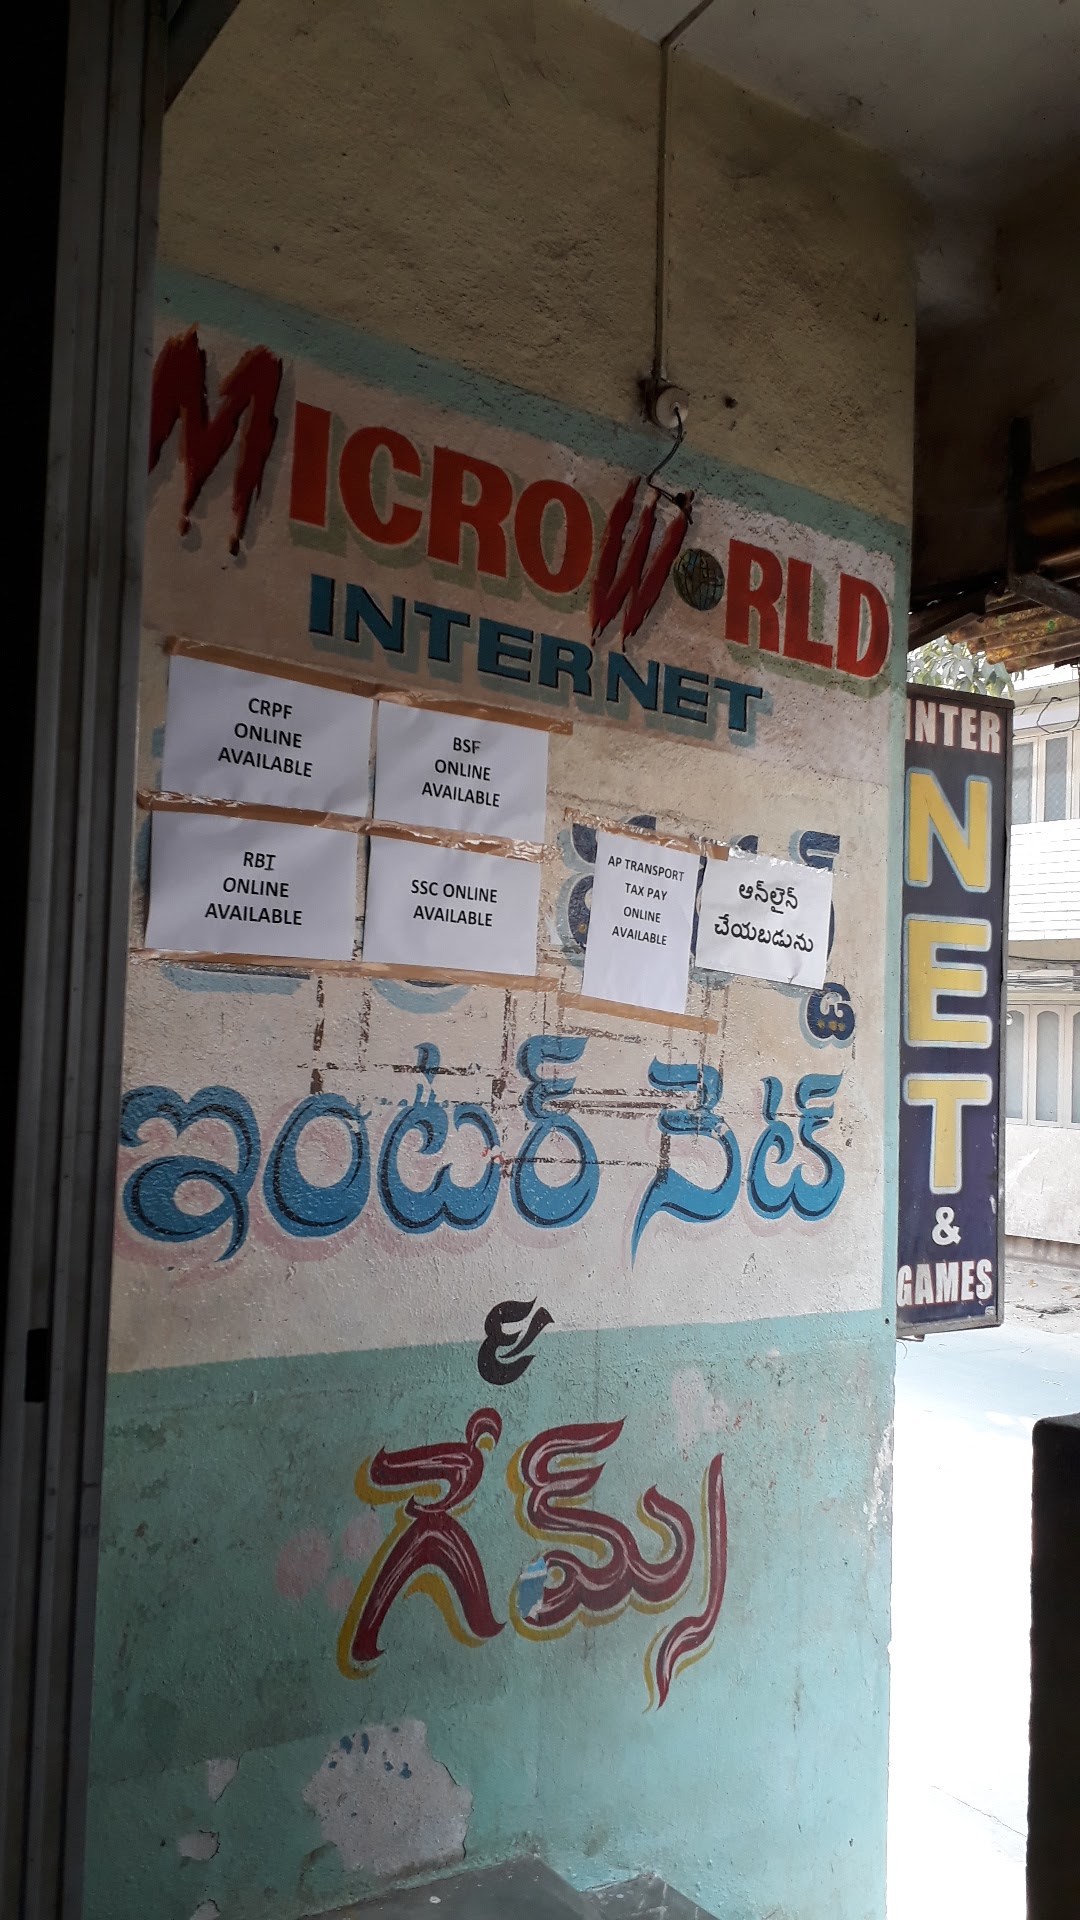 Microworld Internet & xerox